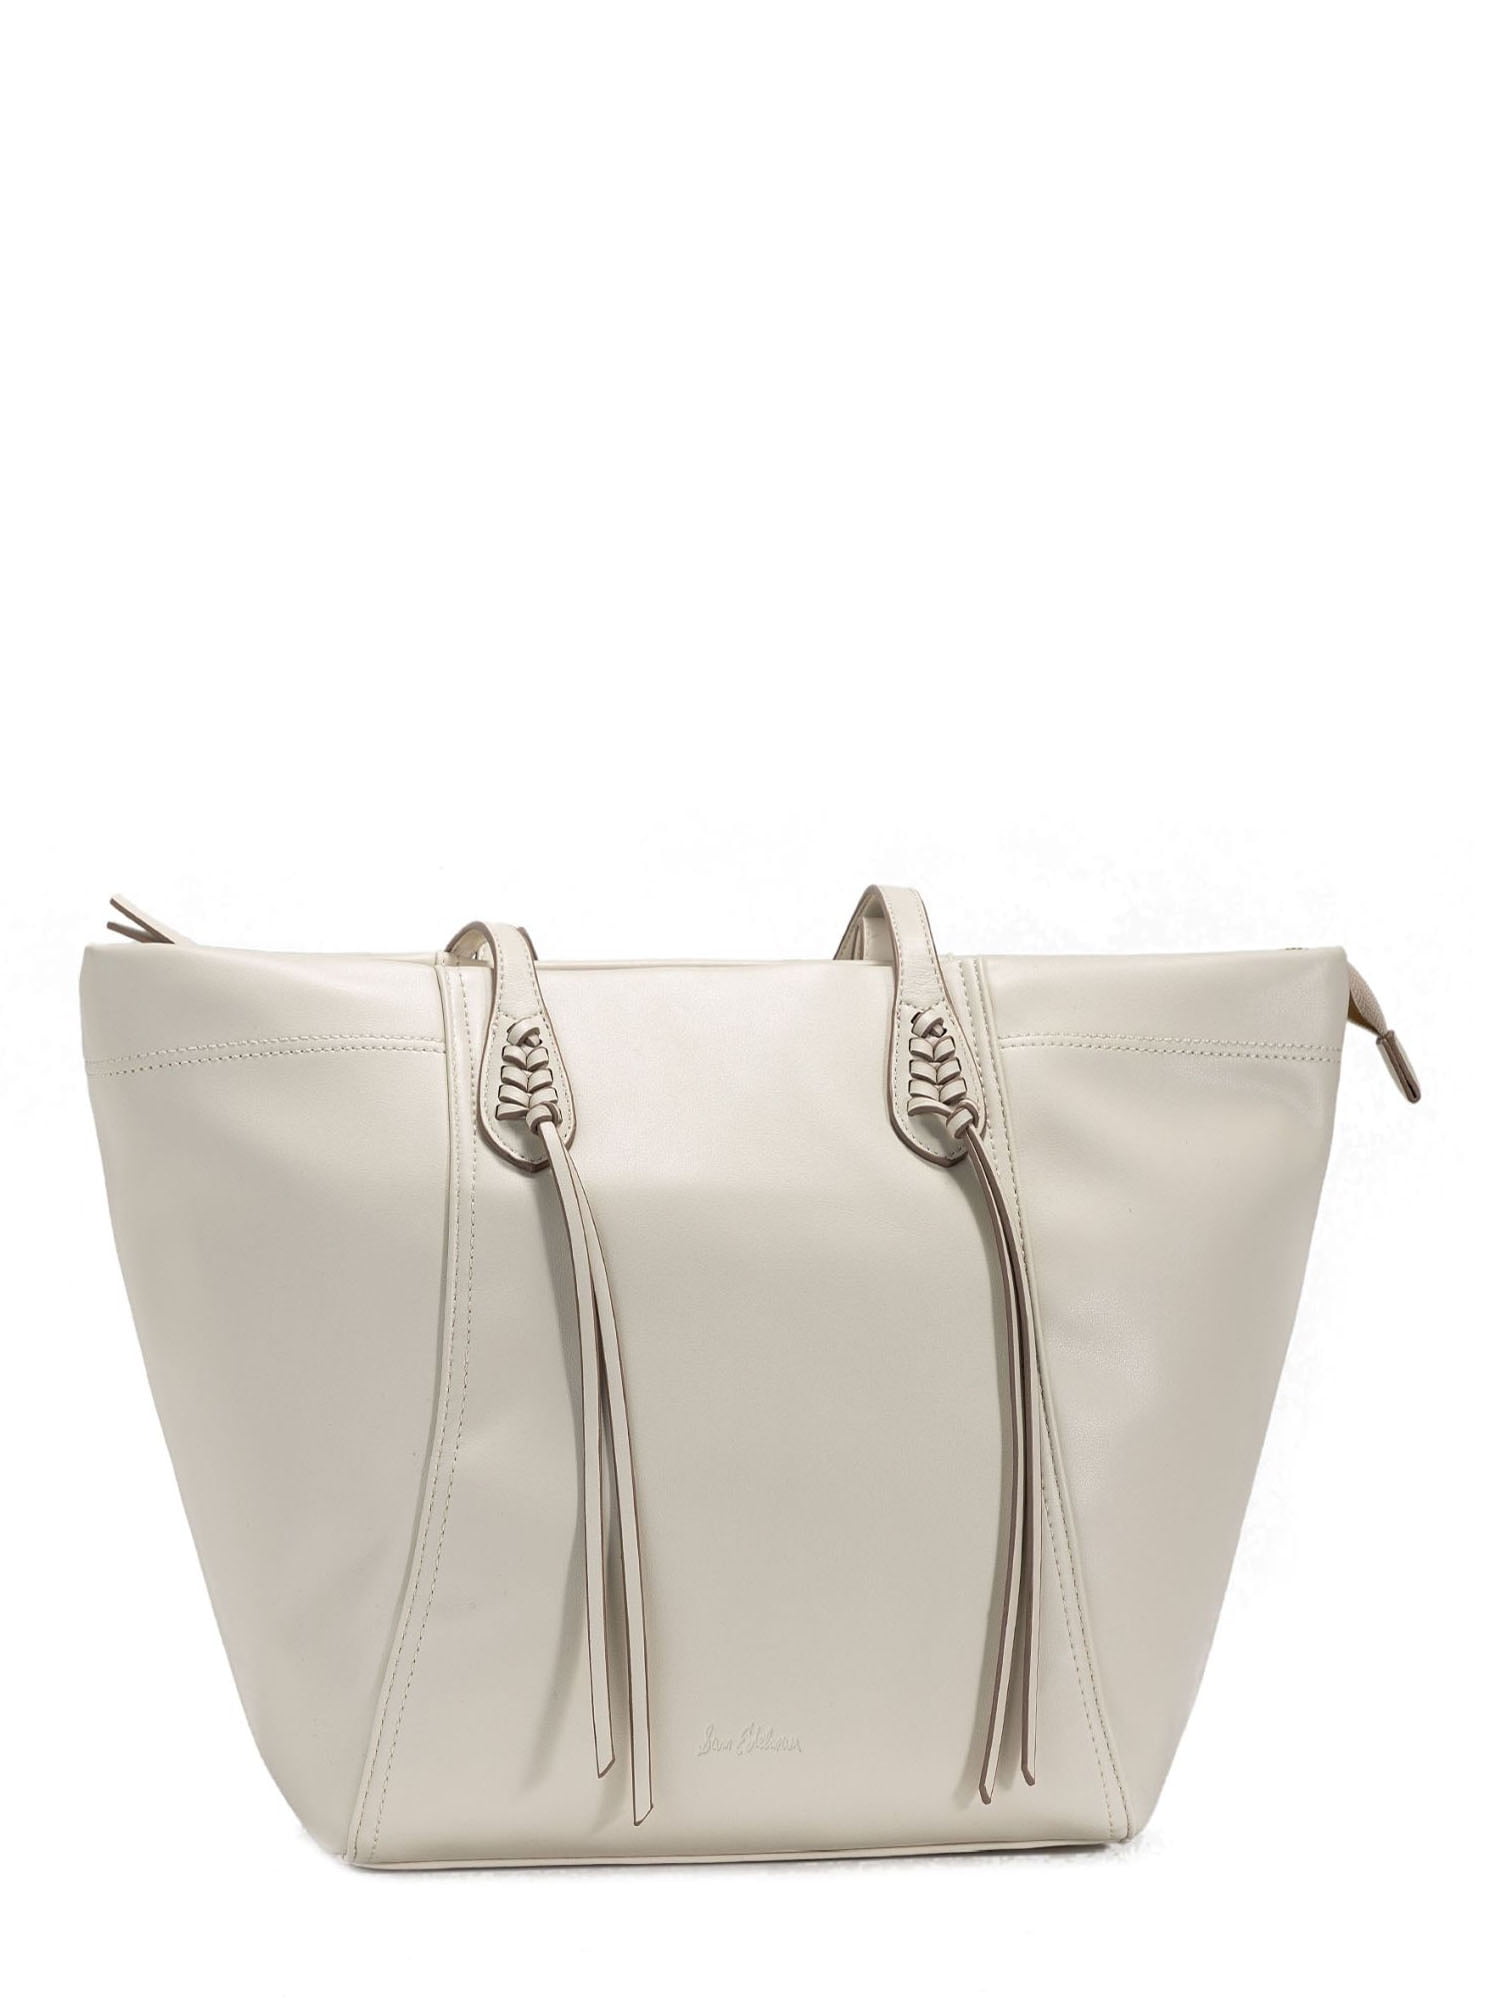 Sam Edelman Women's Sienna Tote Handbag Ivory 